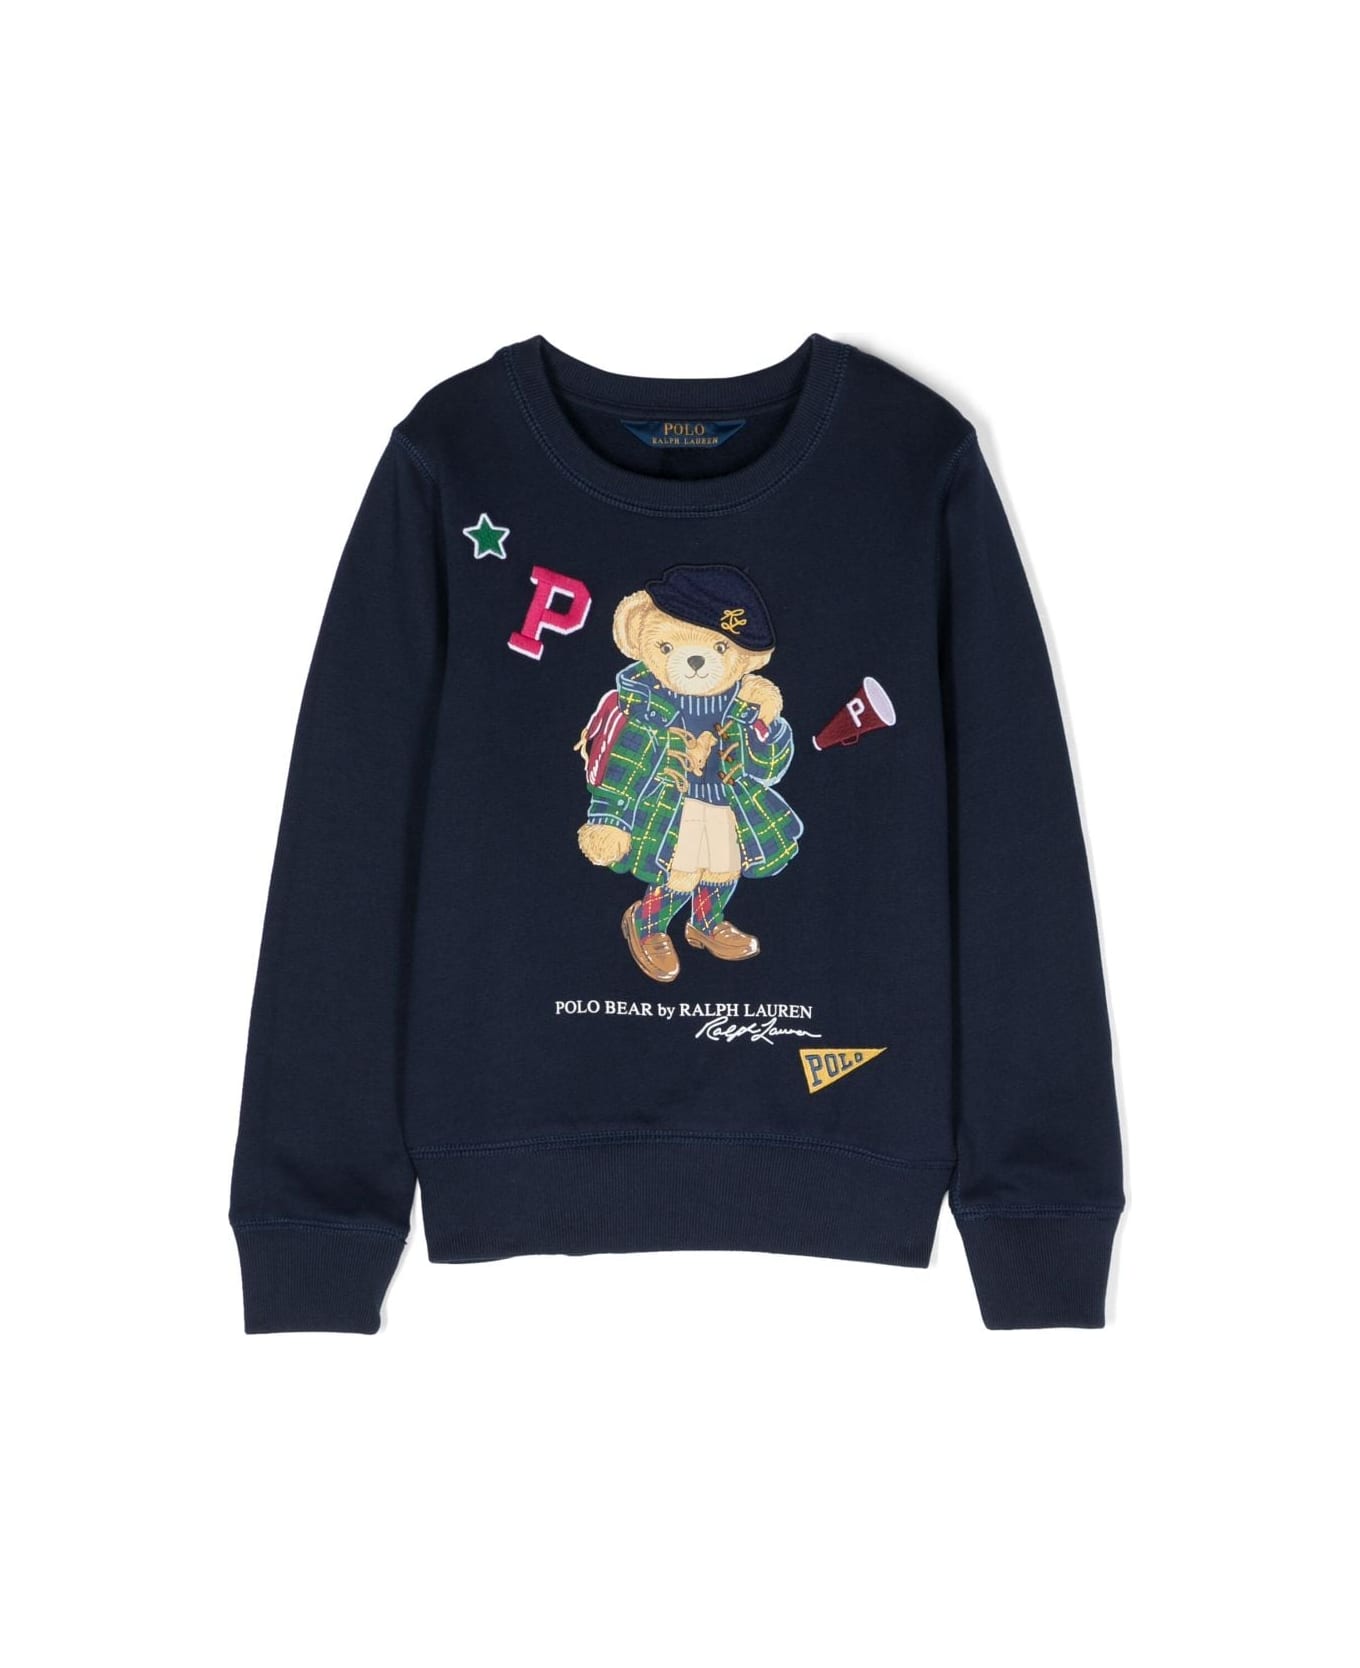 Polo Ralph Lauren Bearcnfleece Knit Shirts Sweatshirt - French Navy